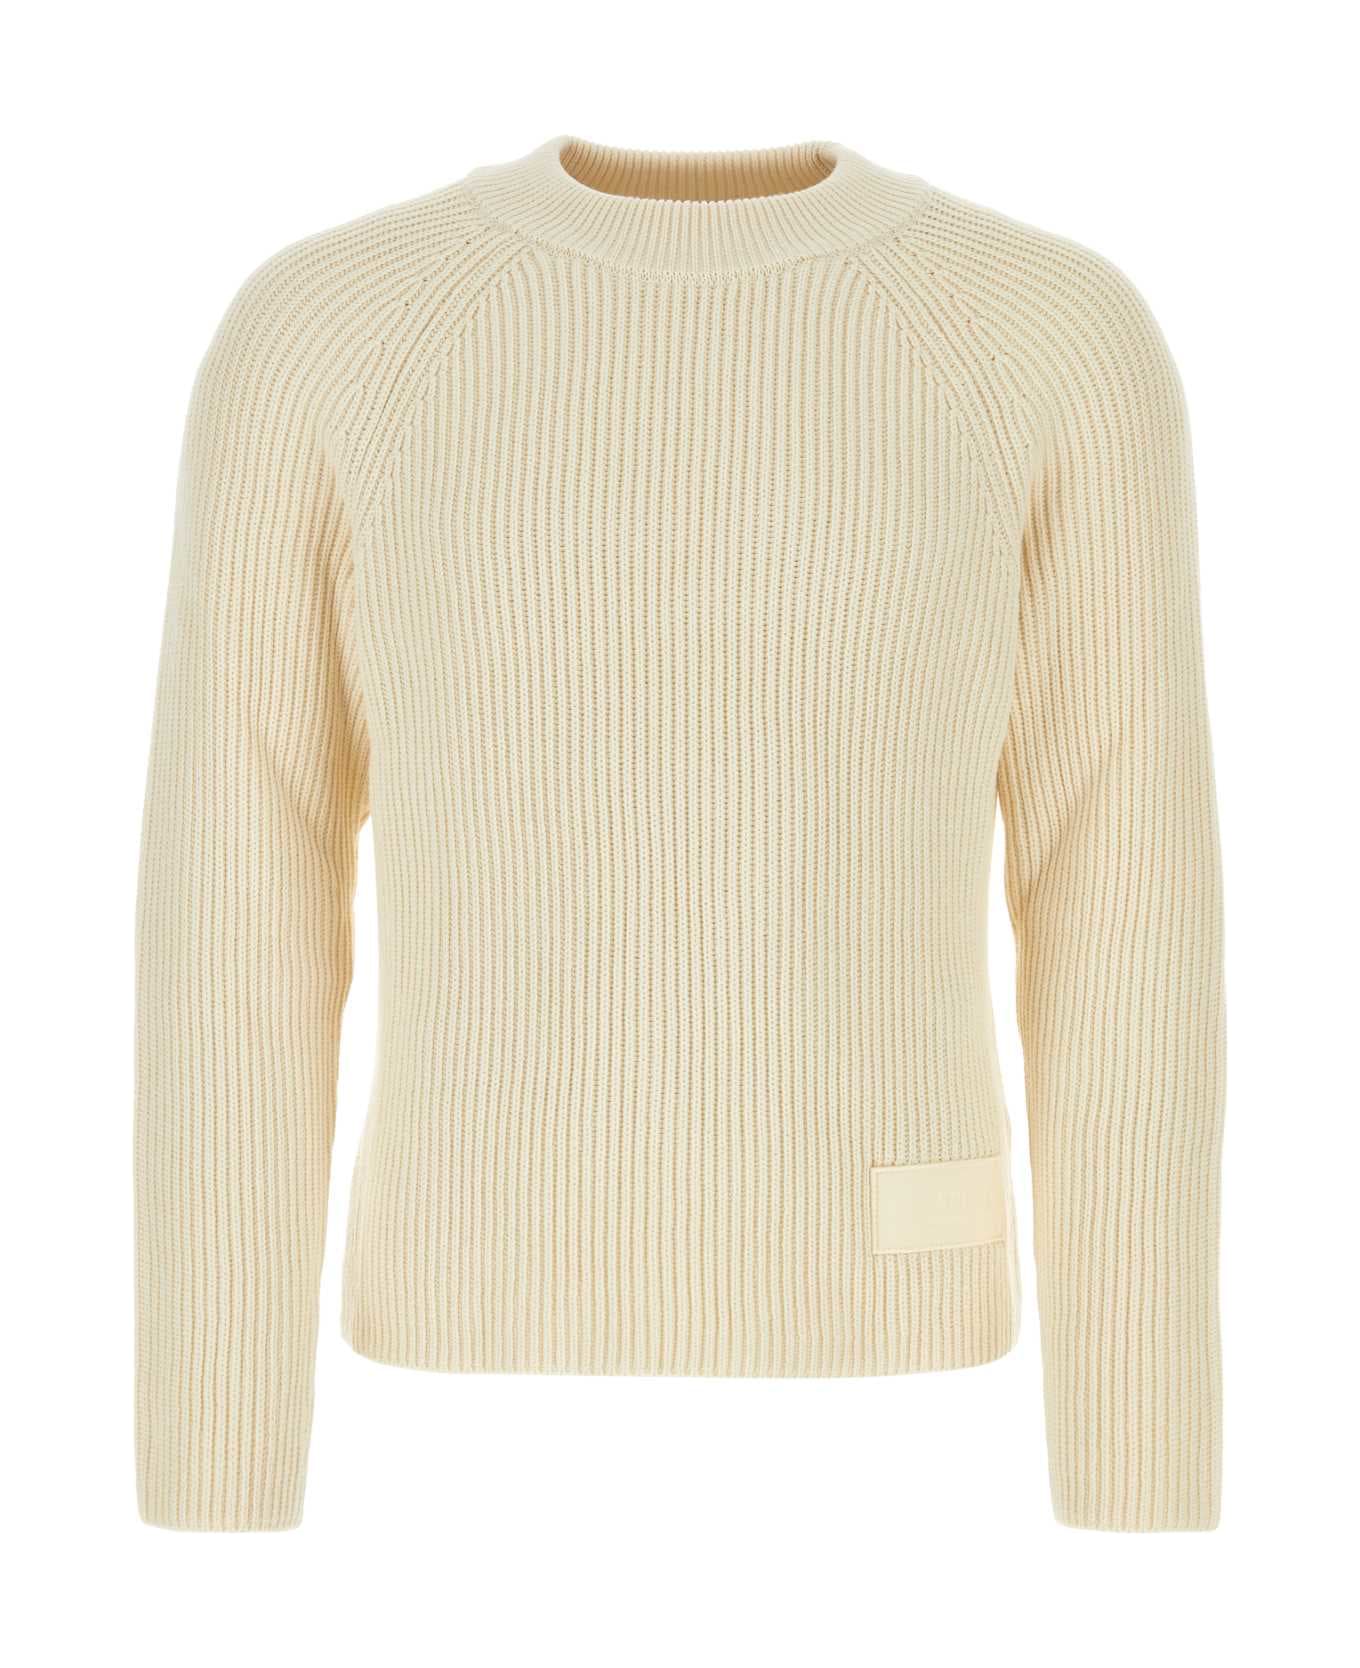 Ami Alexandre Mattiussi Ivory Cotton Blend Sweater - IVORY